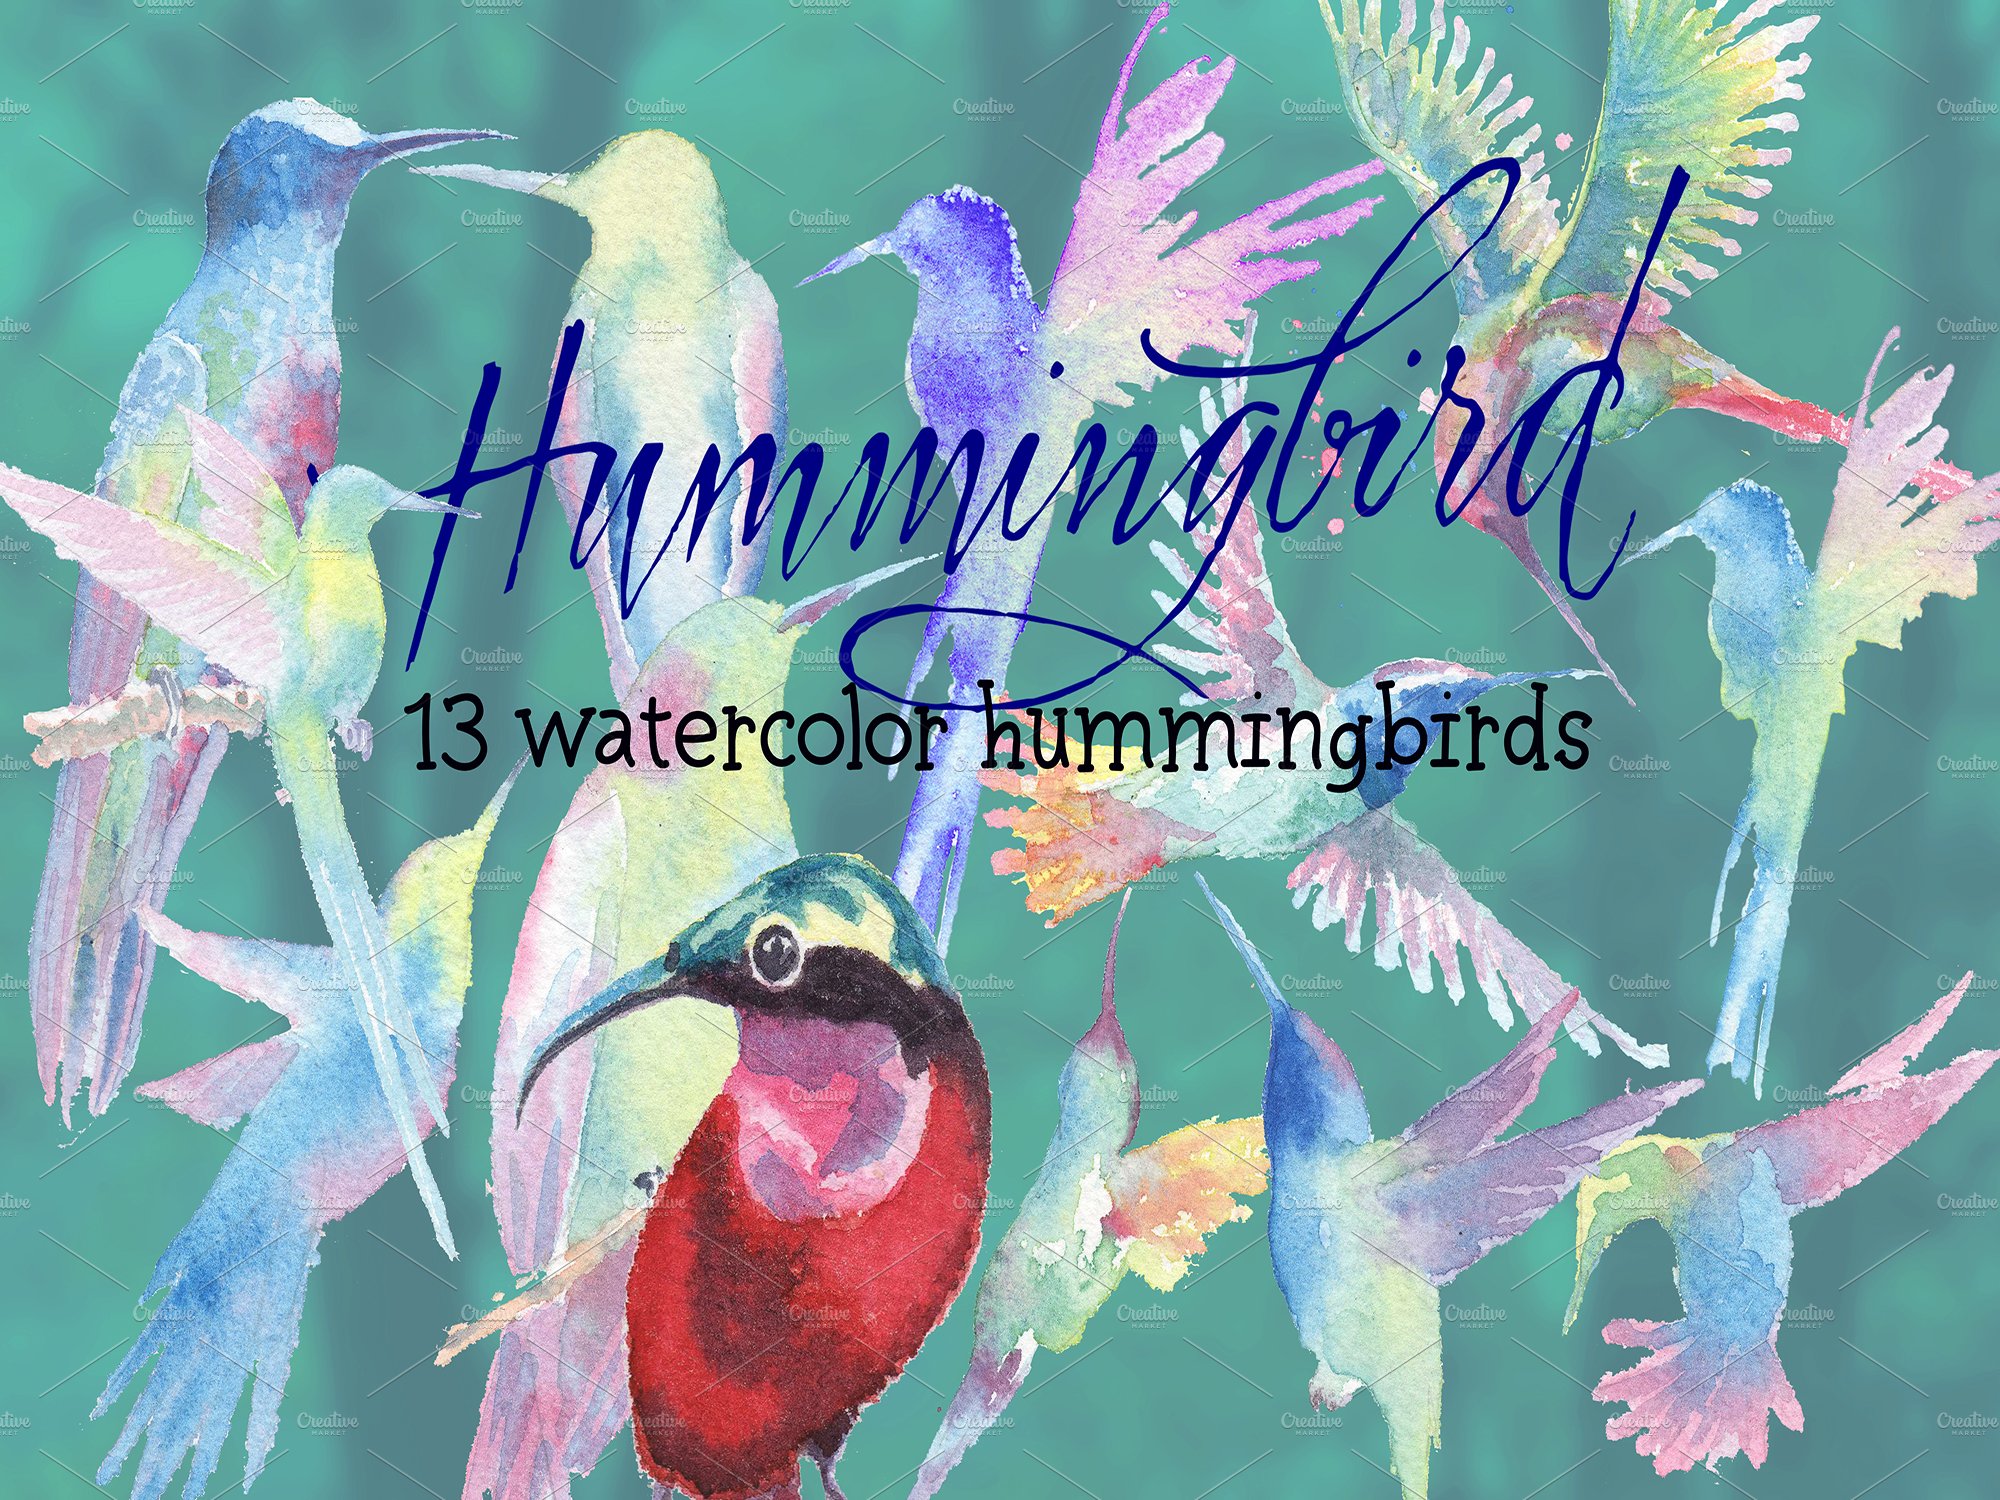 hummingbird6 354